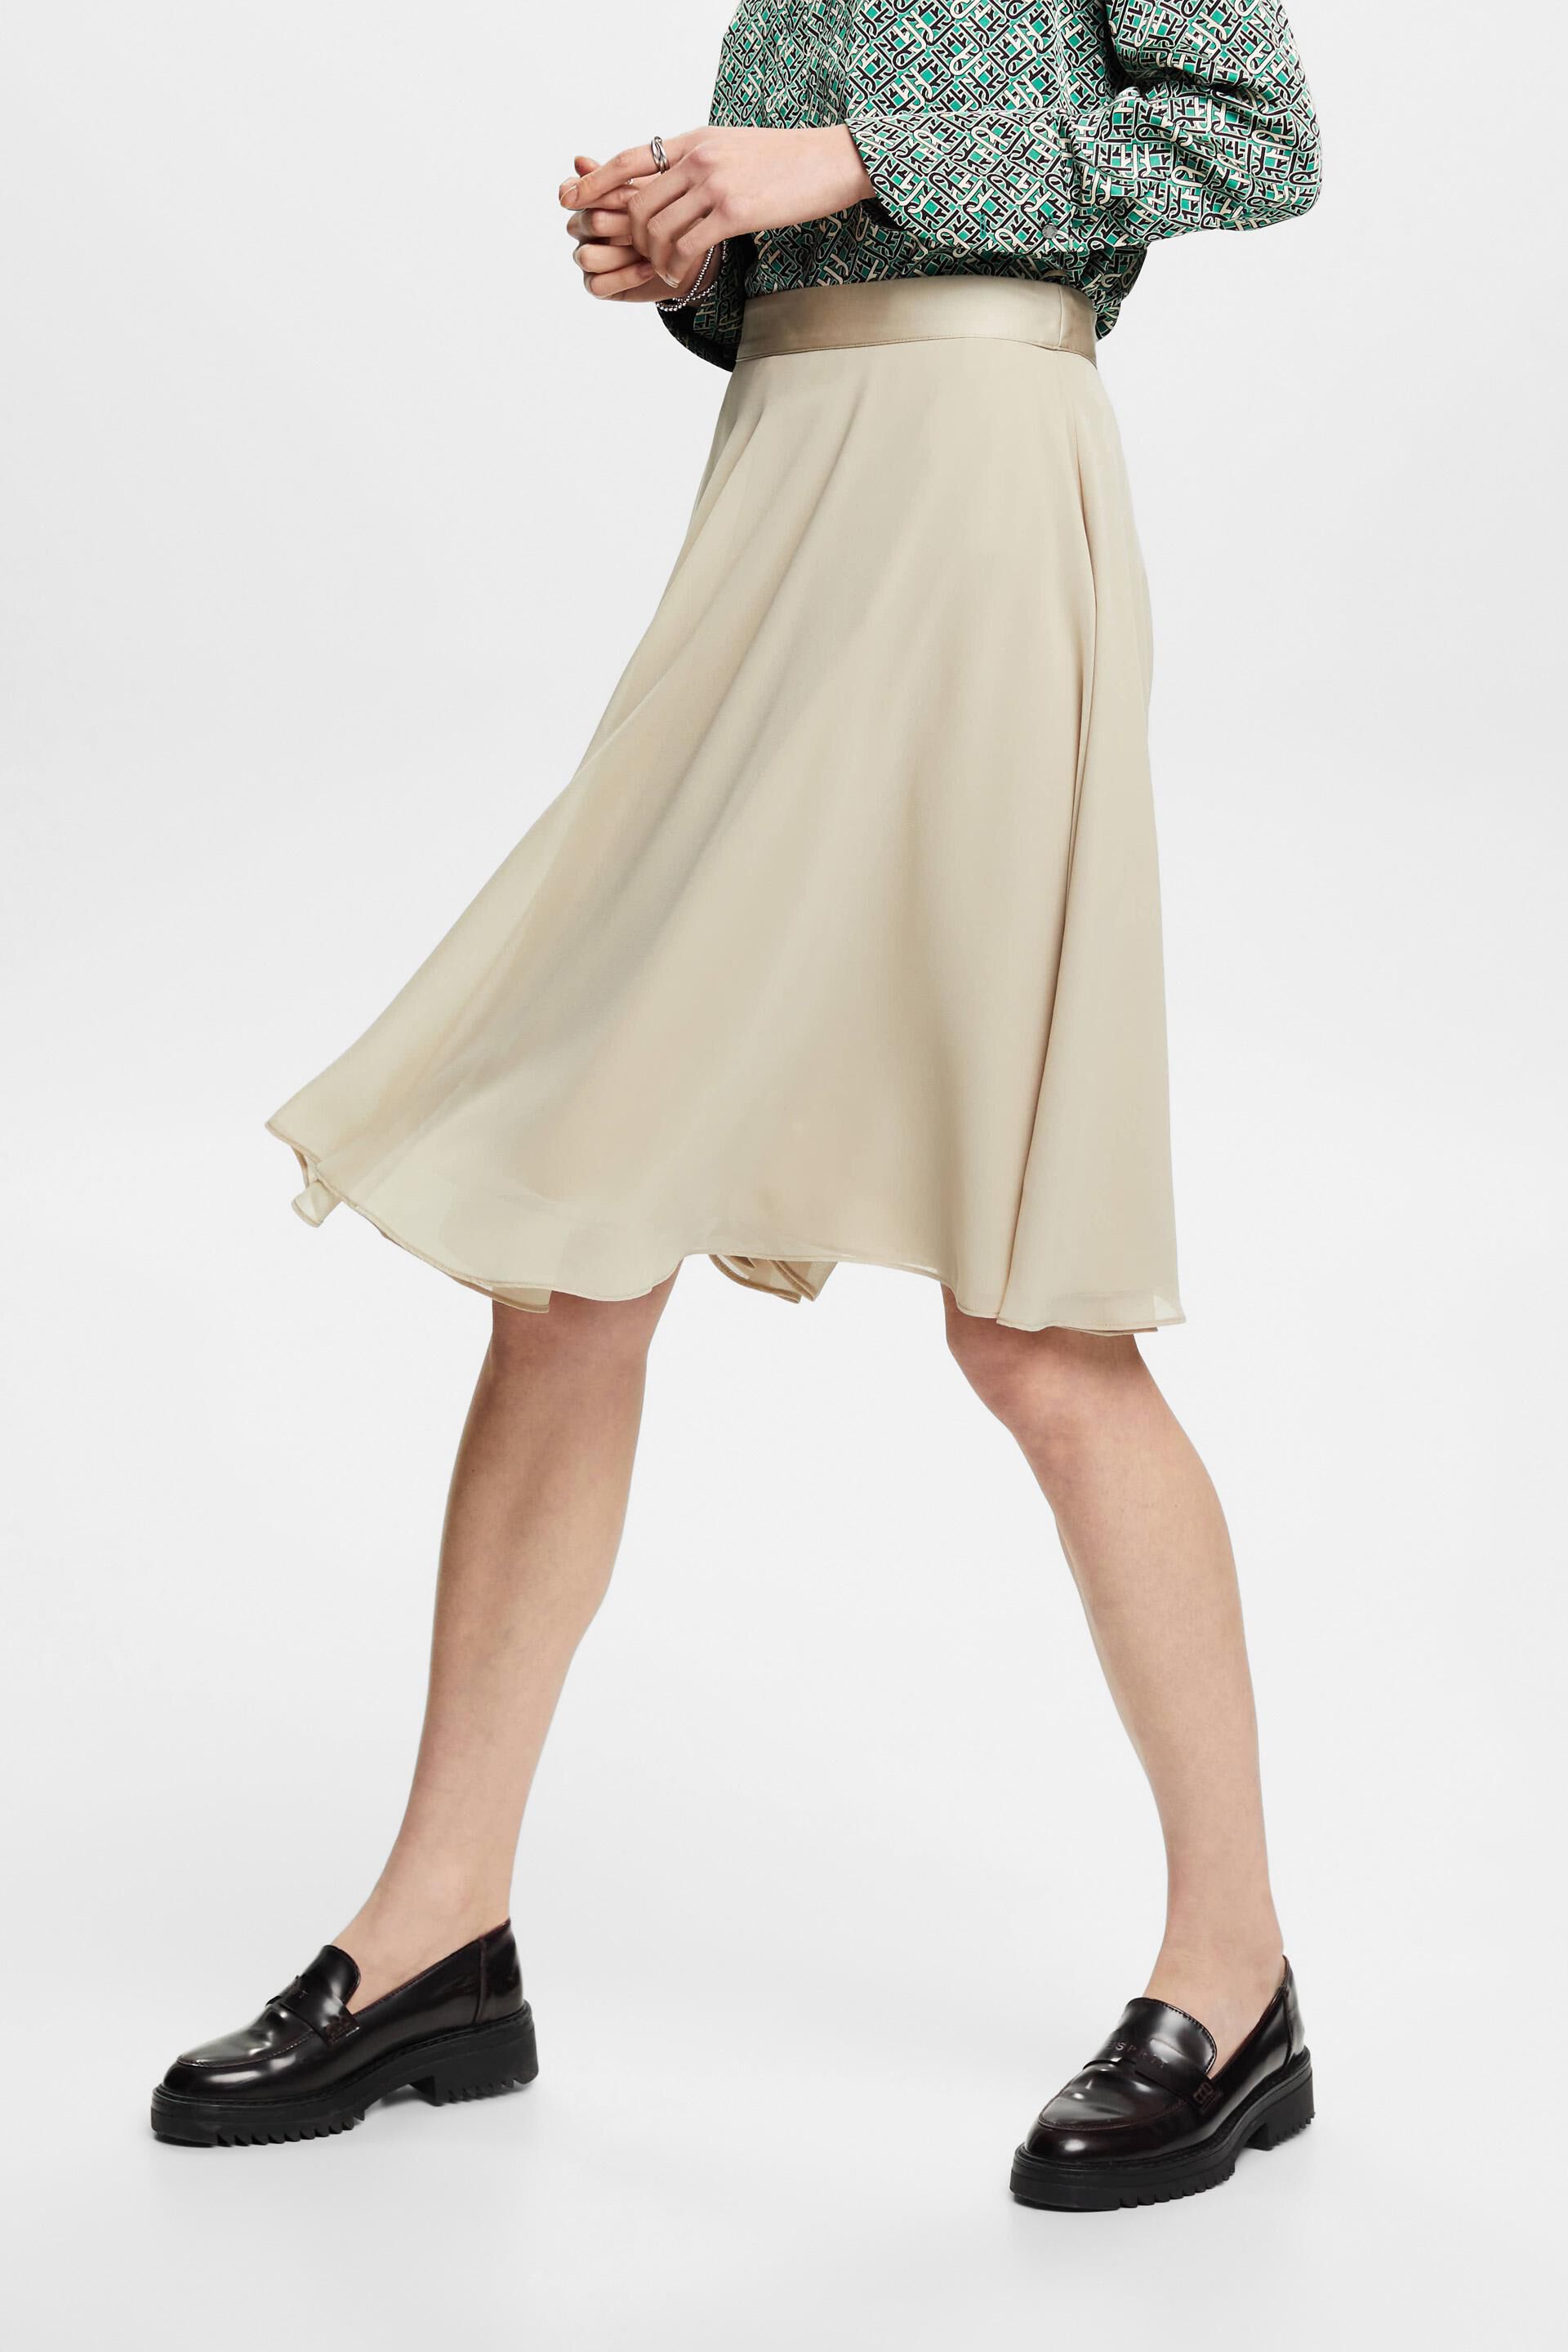 ESPRIT - Knee-length chiffon skirt at our Online Shop